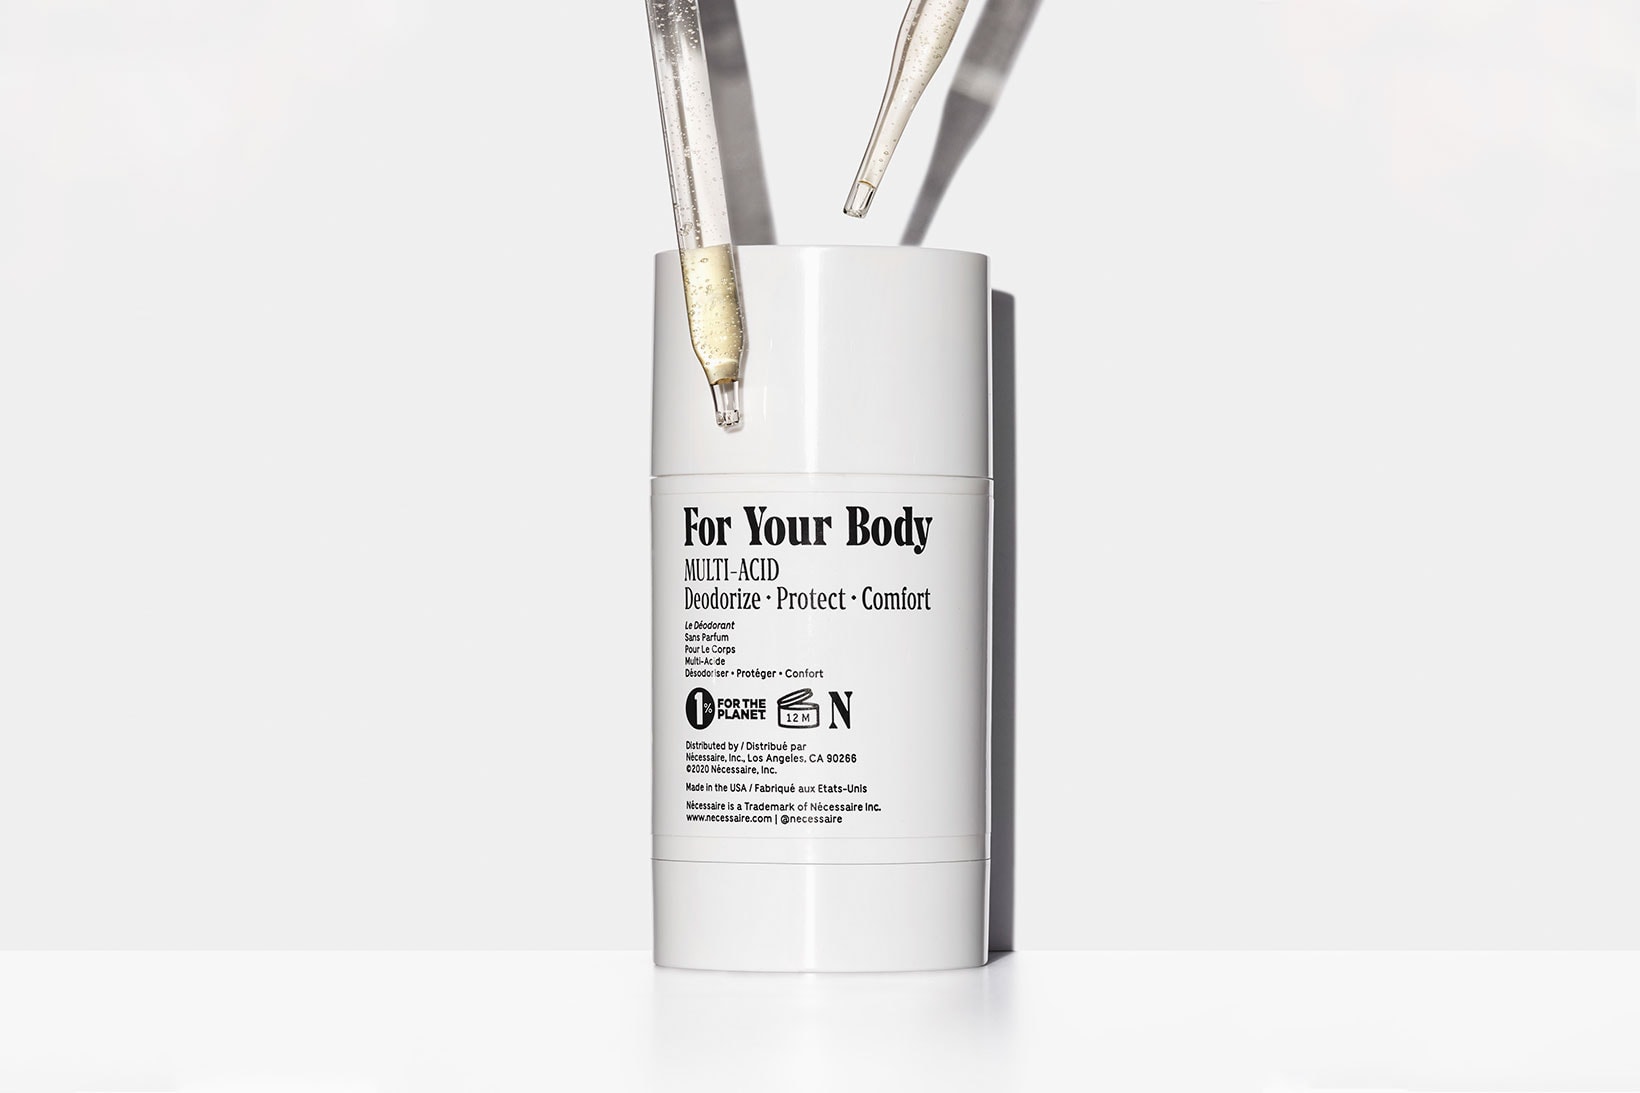 nécessaire the deodorant new scents eucalyptus sandalwood fragrance-free body care